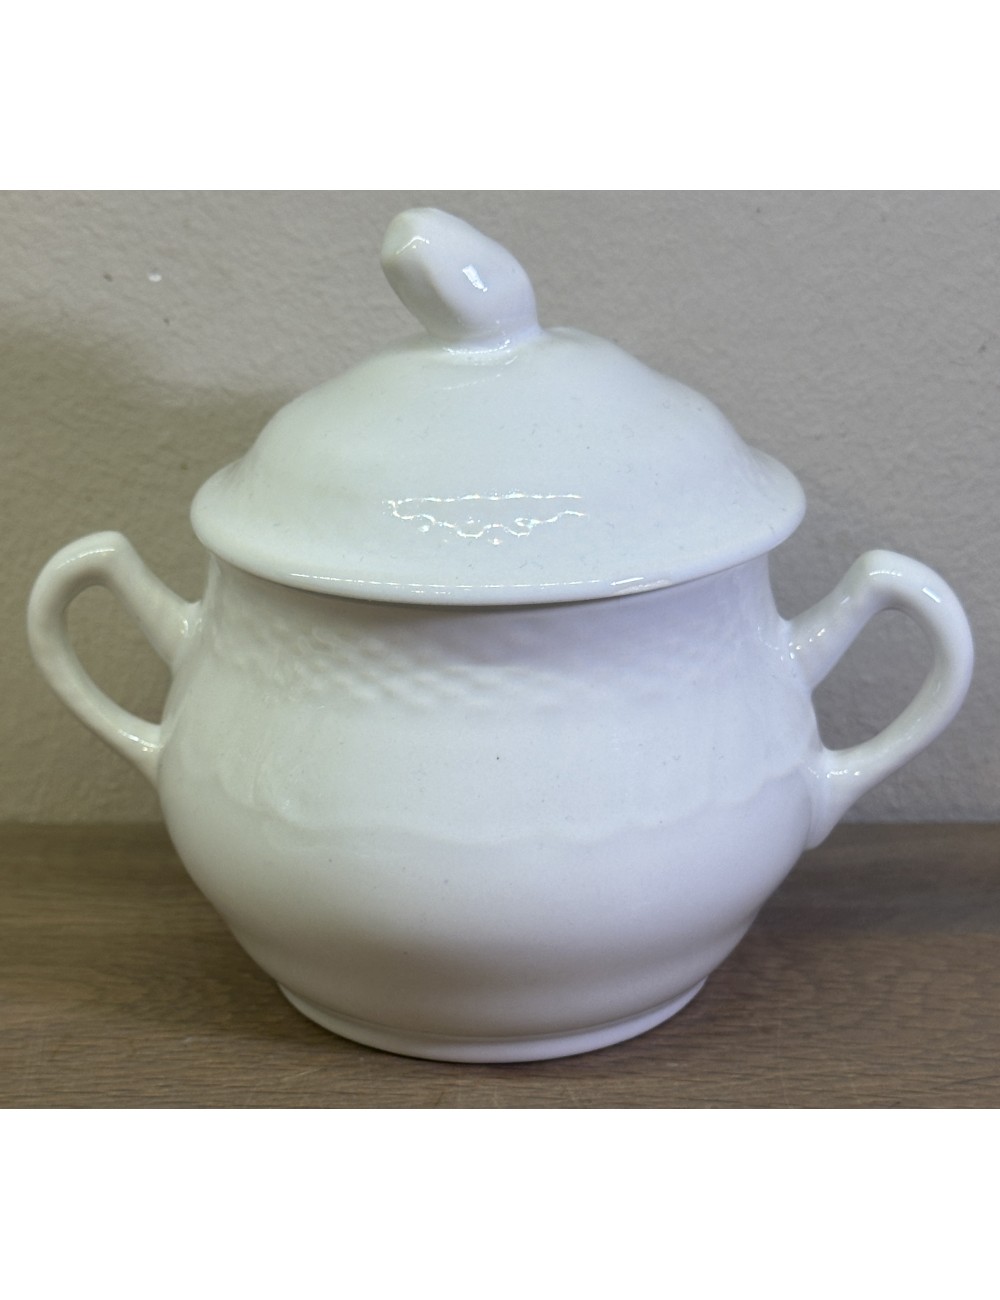 Sugar bowl - Boch - shape OSIER - décor CHAMONIX executed in cream/white